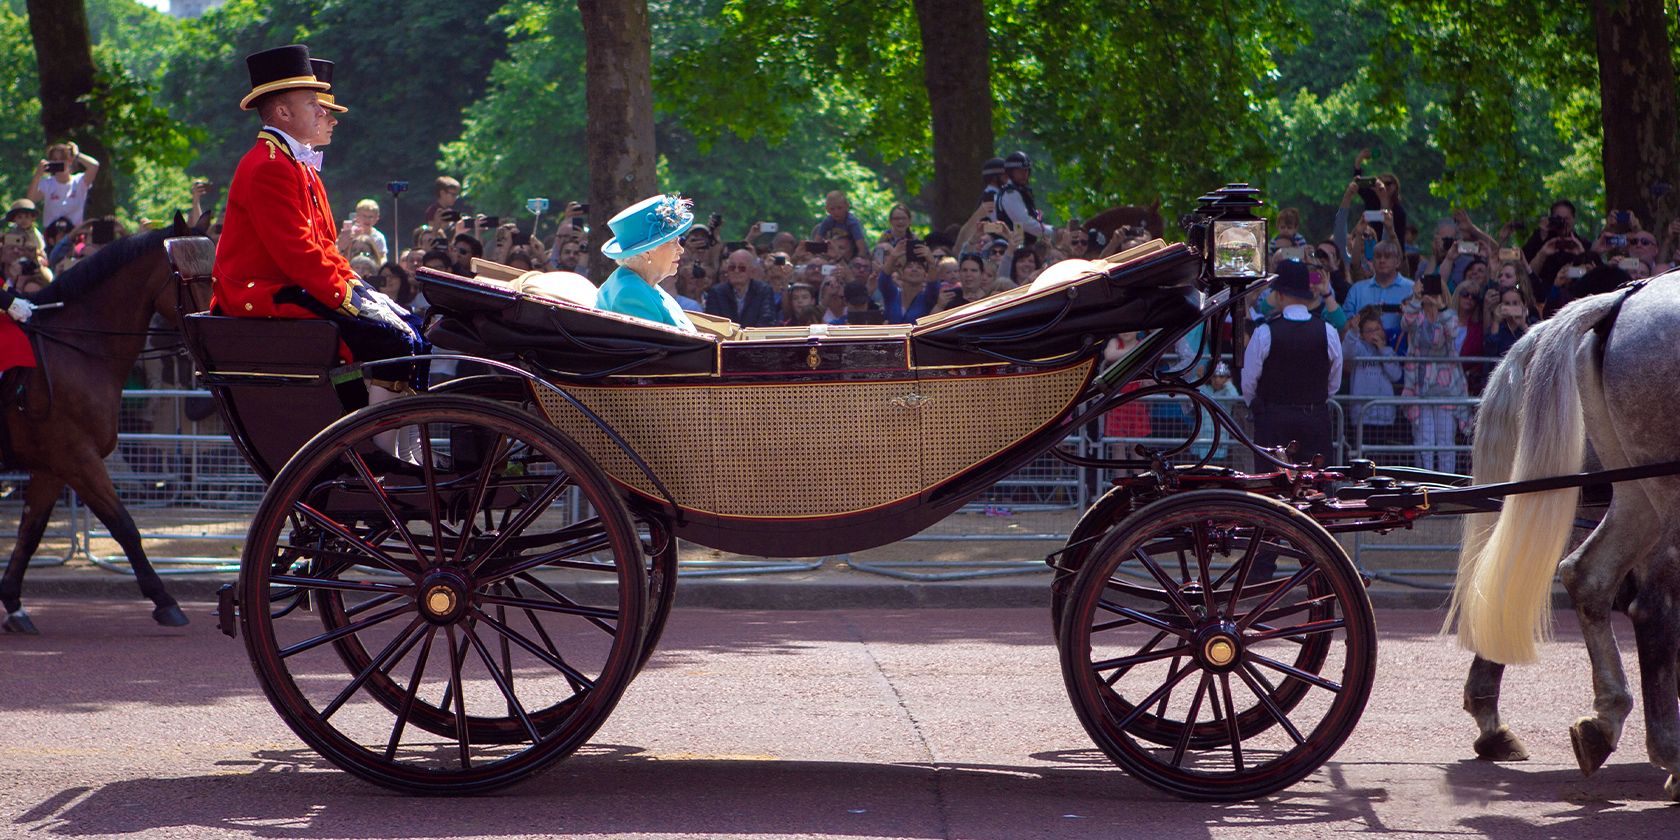 Queen Elizabeth II riding a carriage